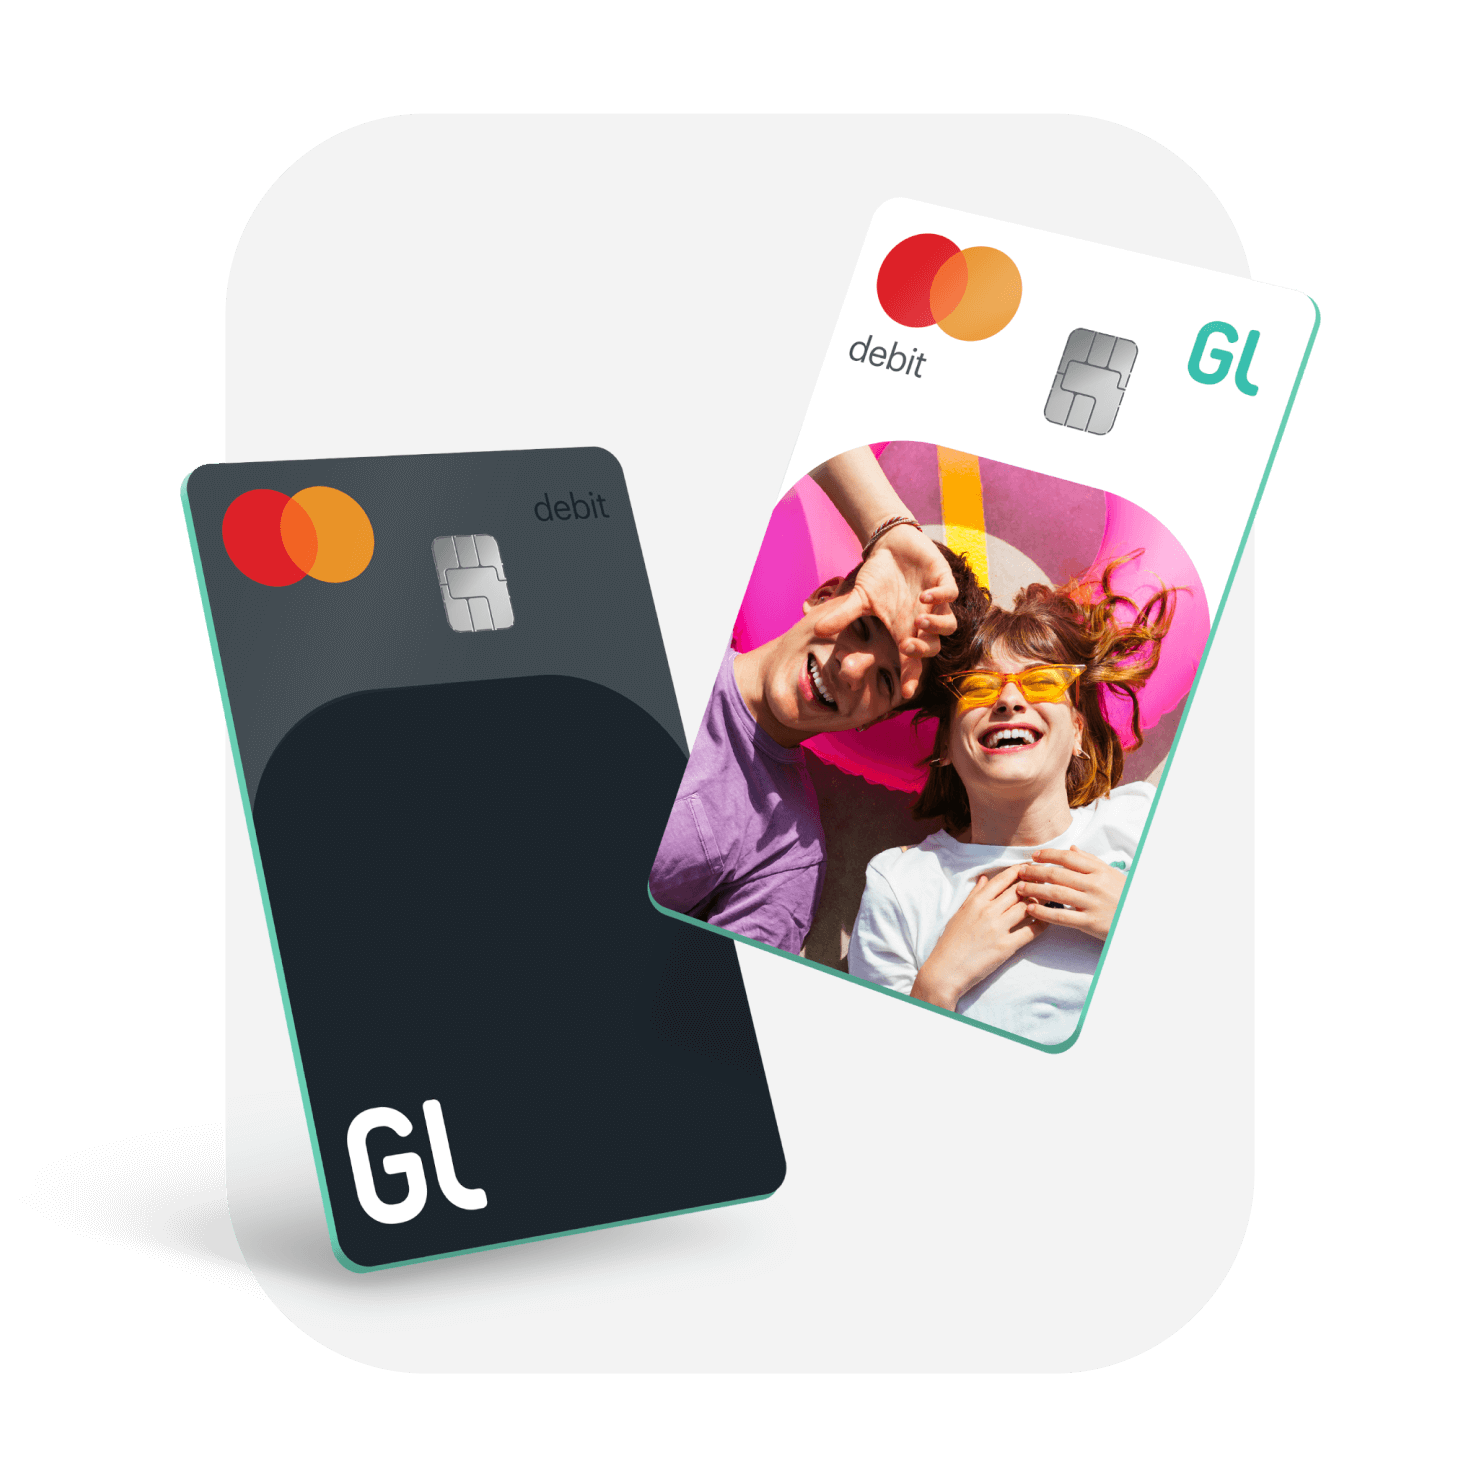 Greenlight Debit Cards - Black Debit Card and Customized Debit Card with Best Friends